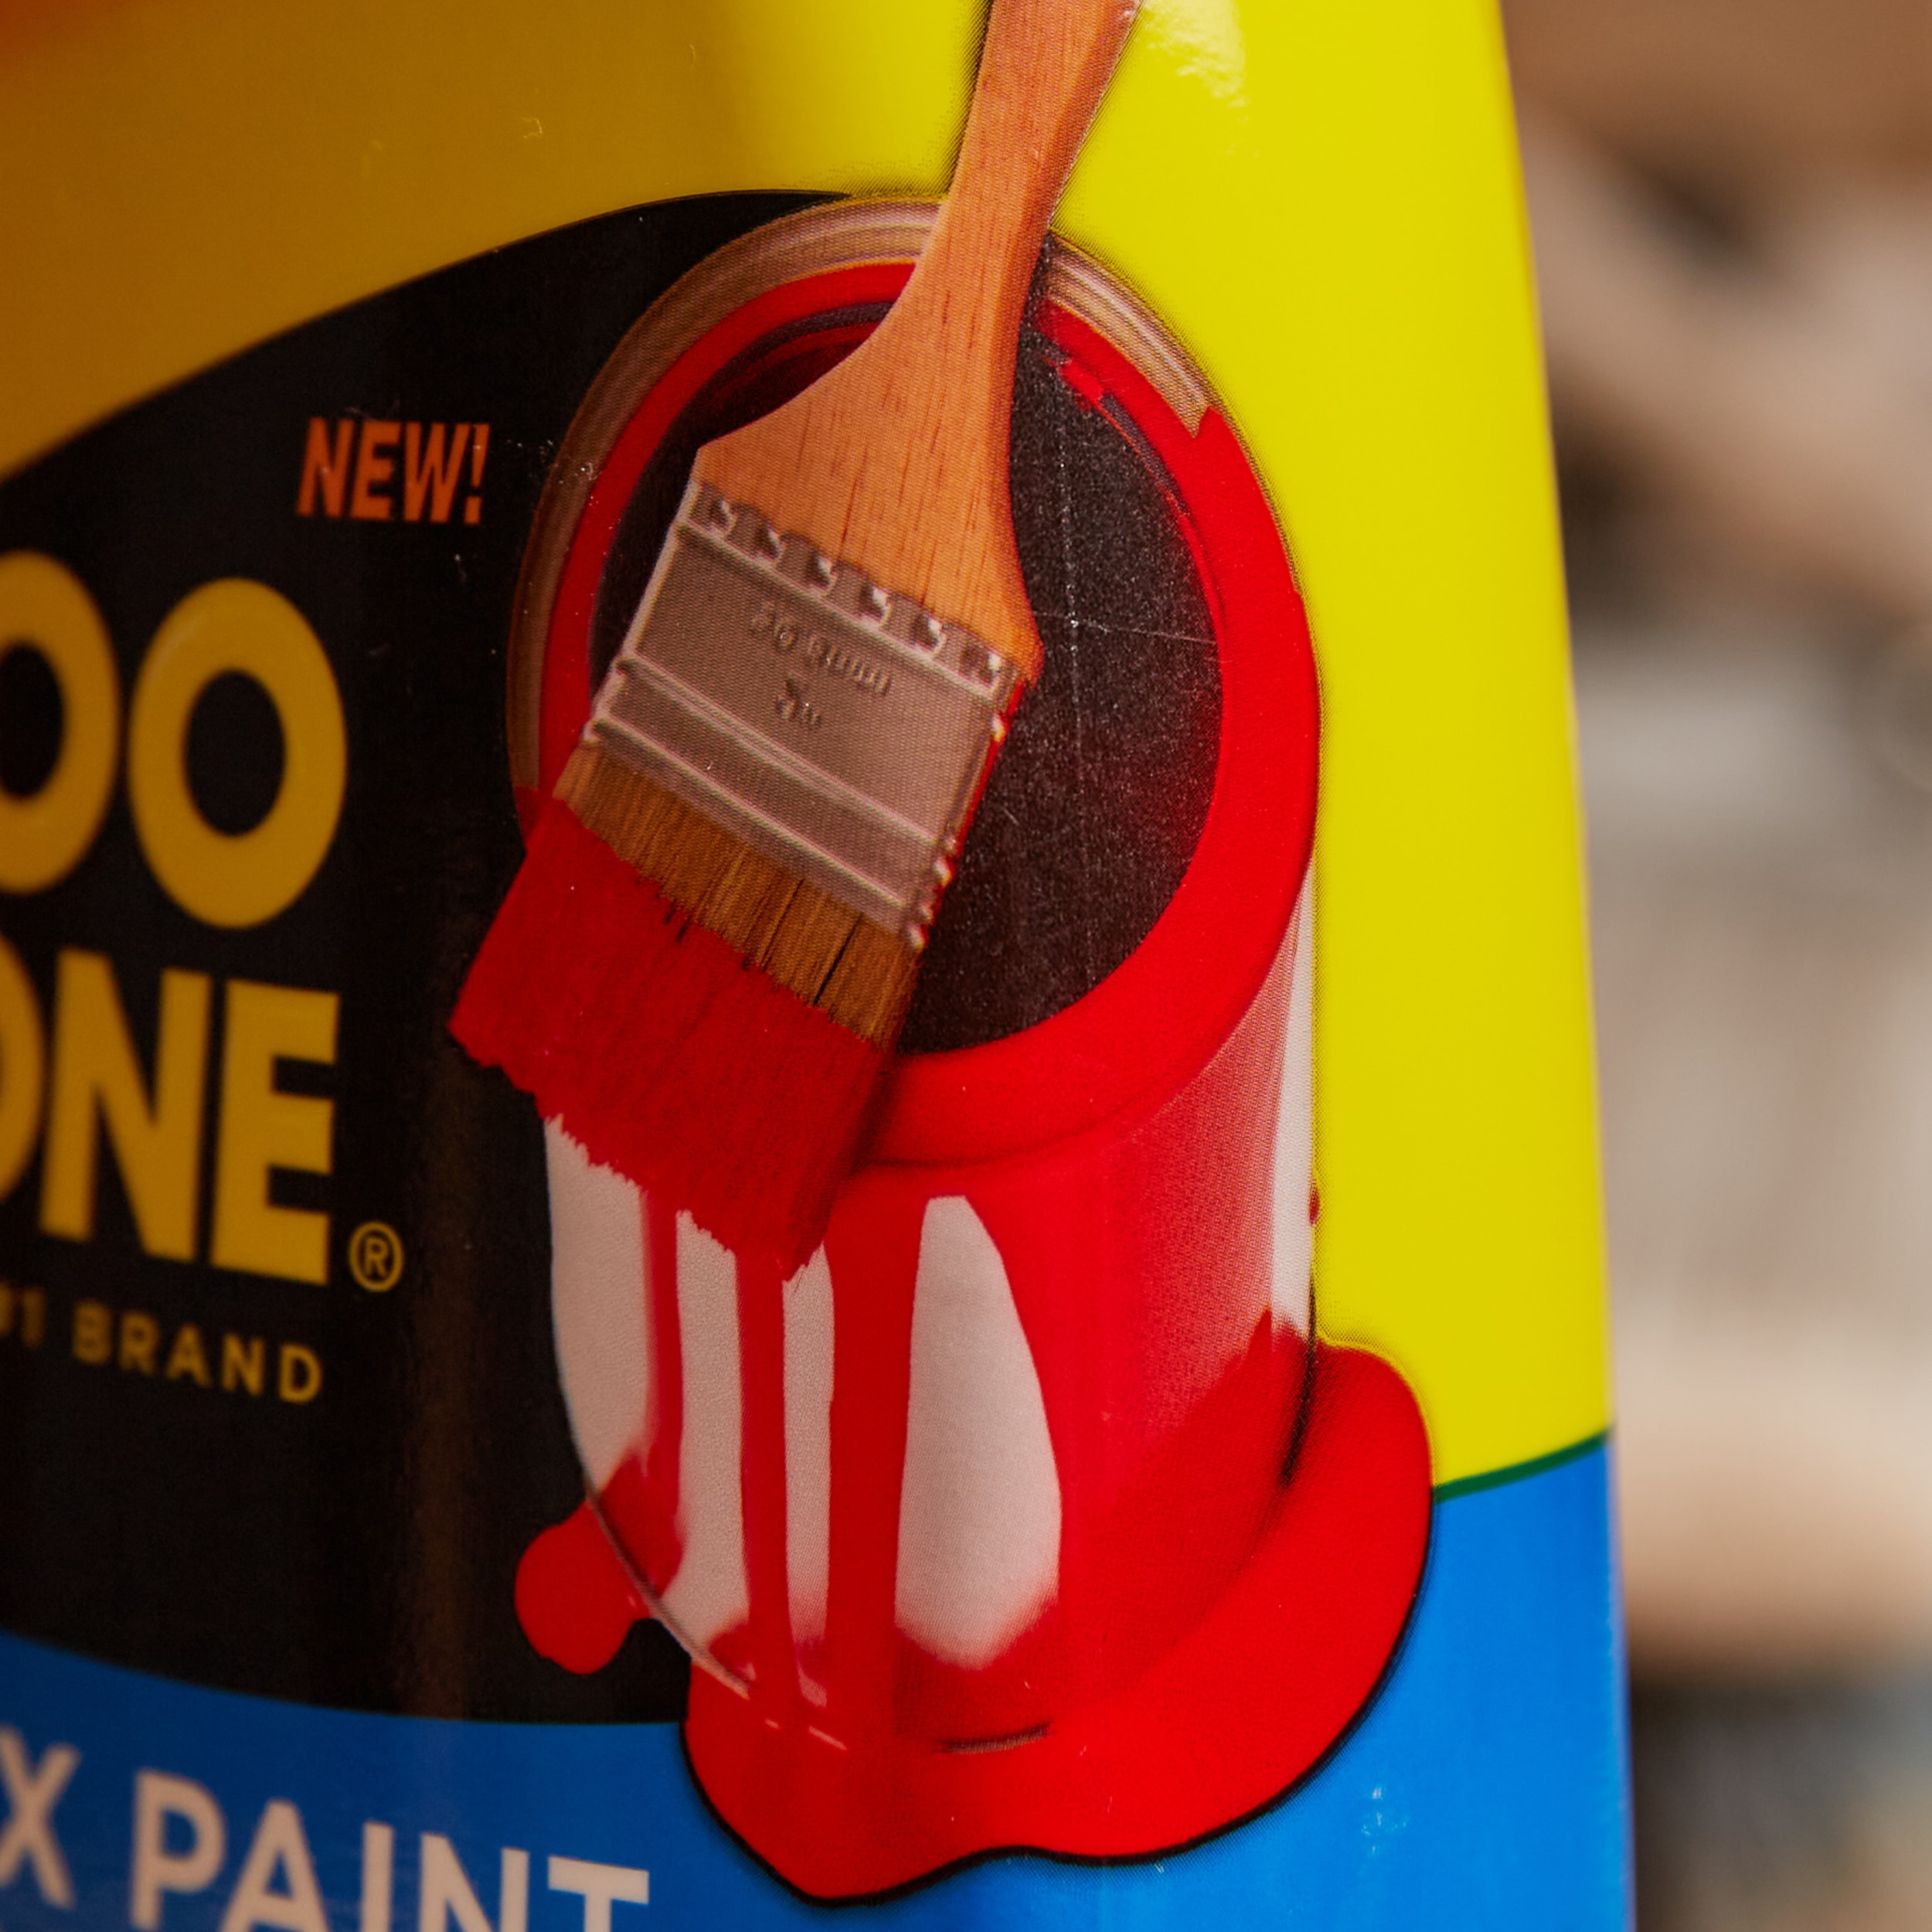 Goo Gone® Paint Clean-Up Spray, 14 fl oz - Pick 'n Save